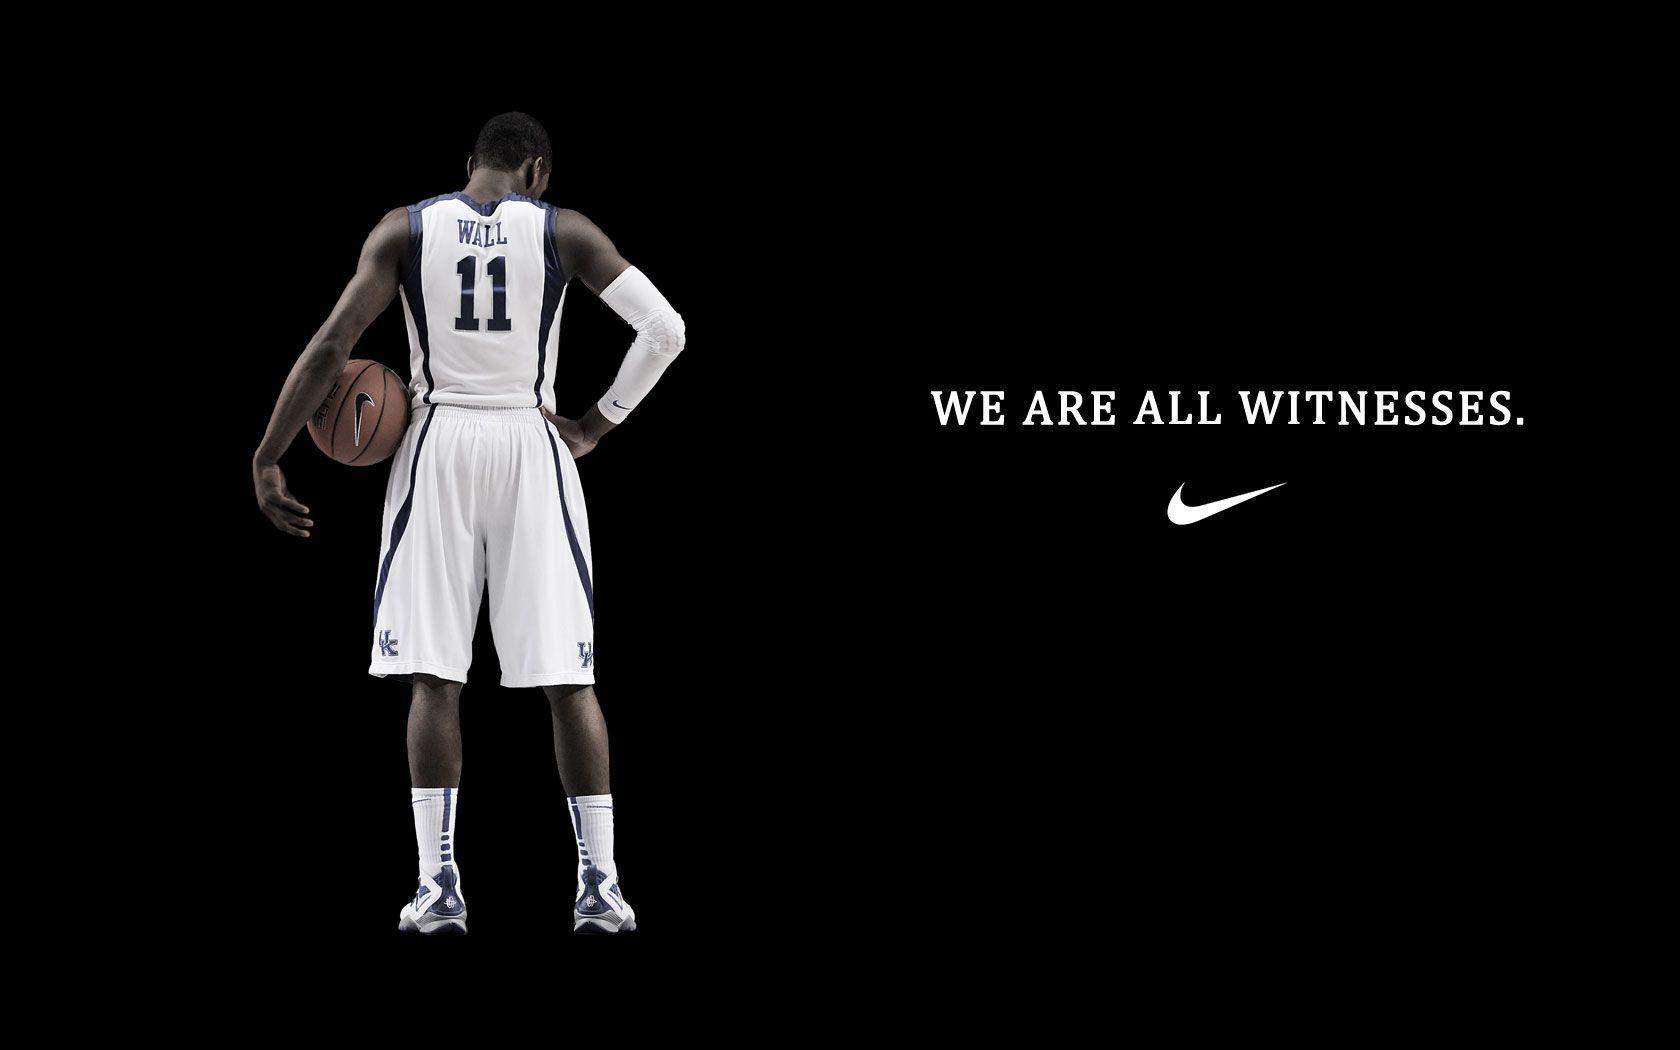 Nike Basketball Wallpaper For iPhone 5 New Nike